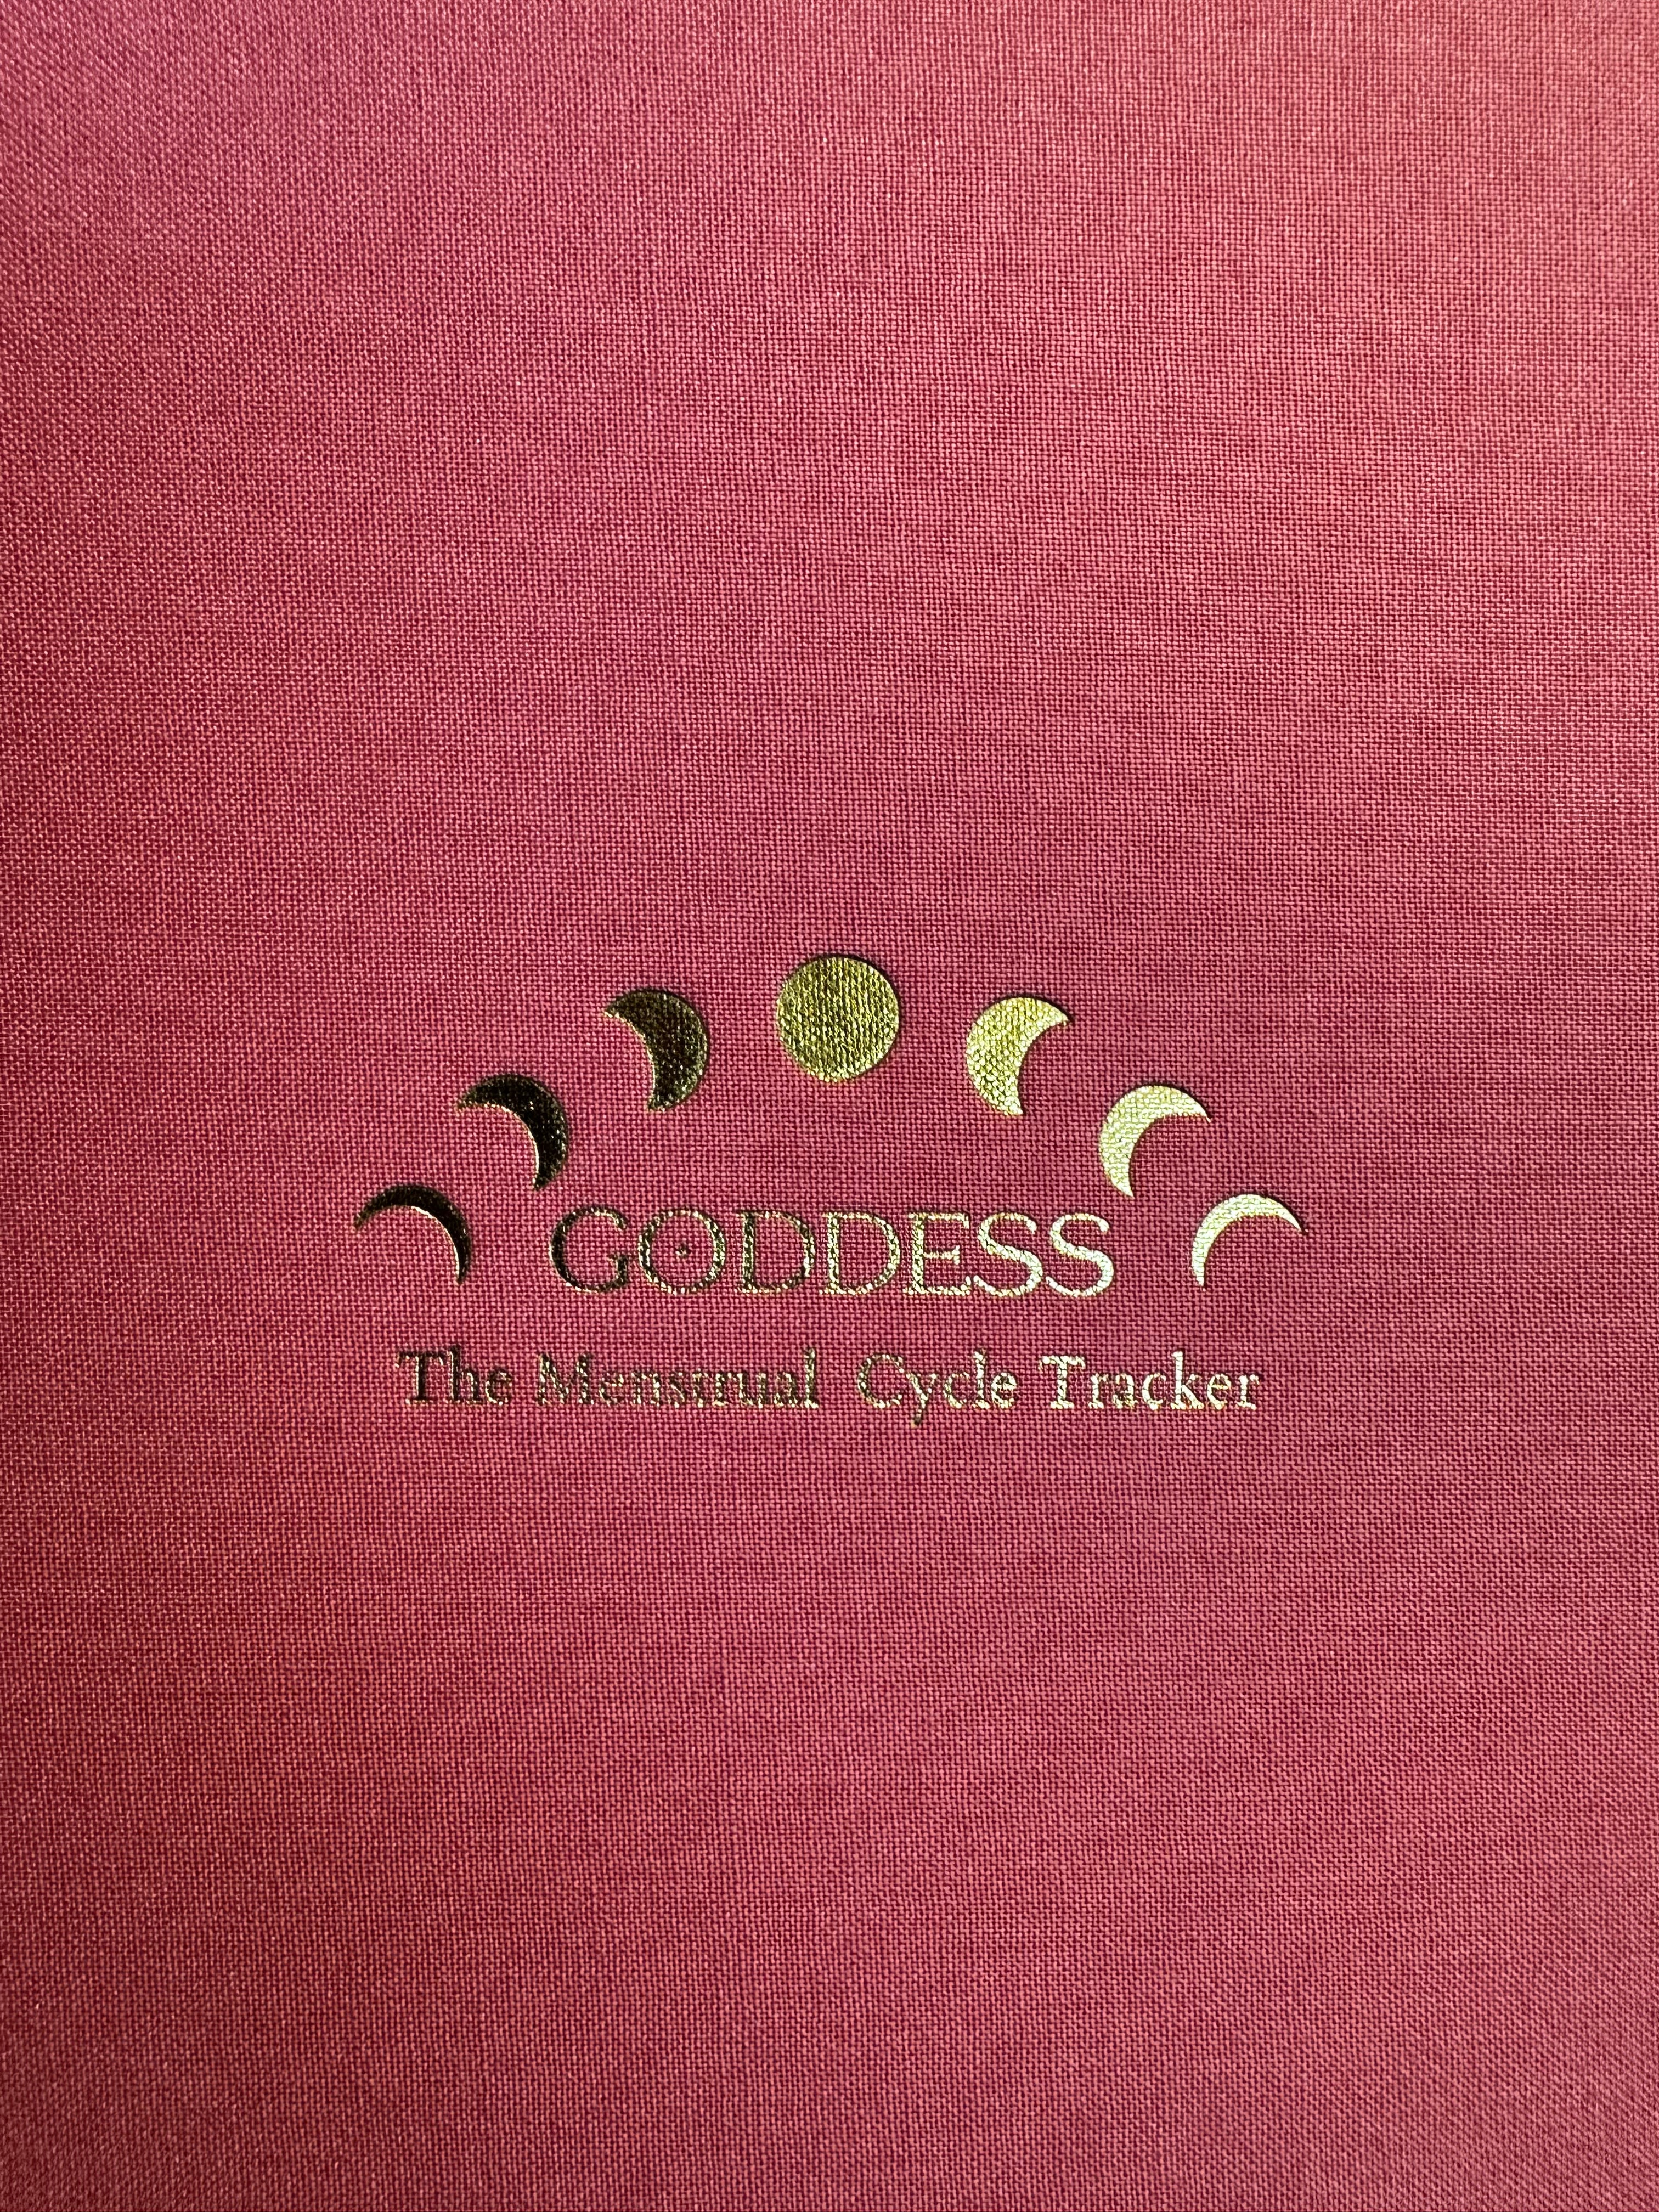 Book Goddess - The menstrual Cycle Tracker